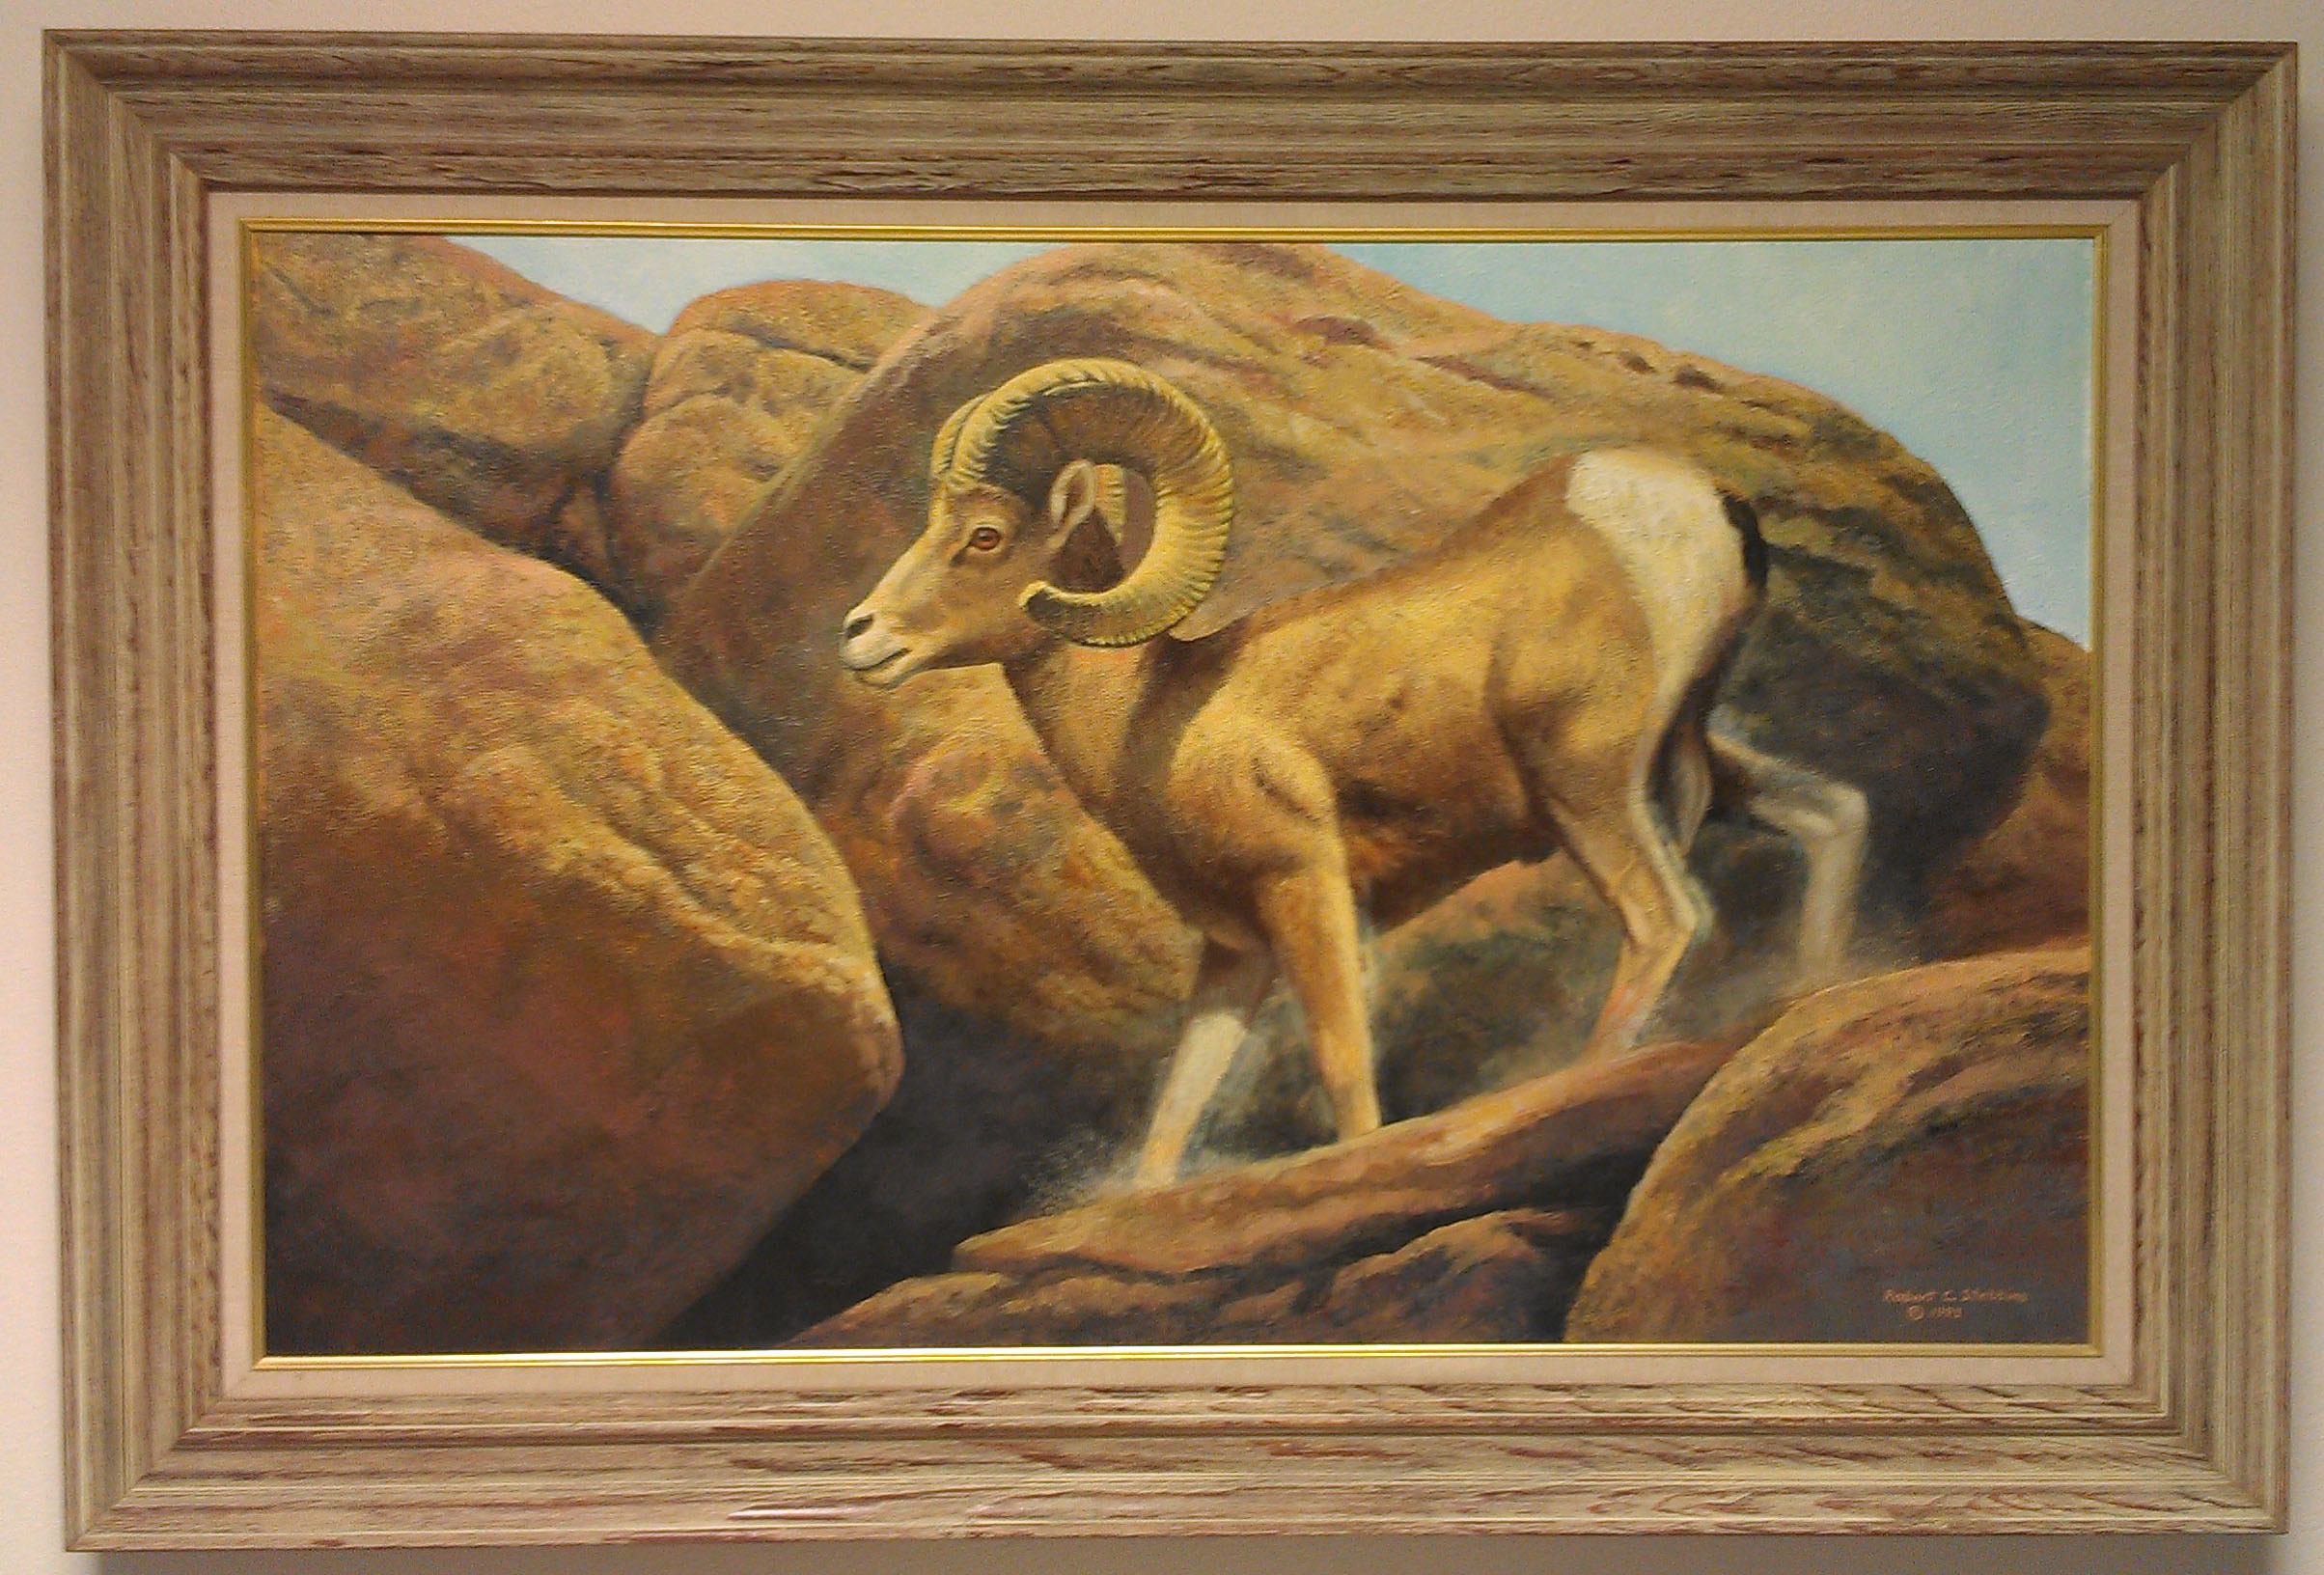 Stebbins oil painting, 1993